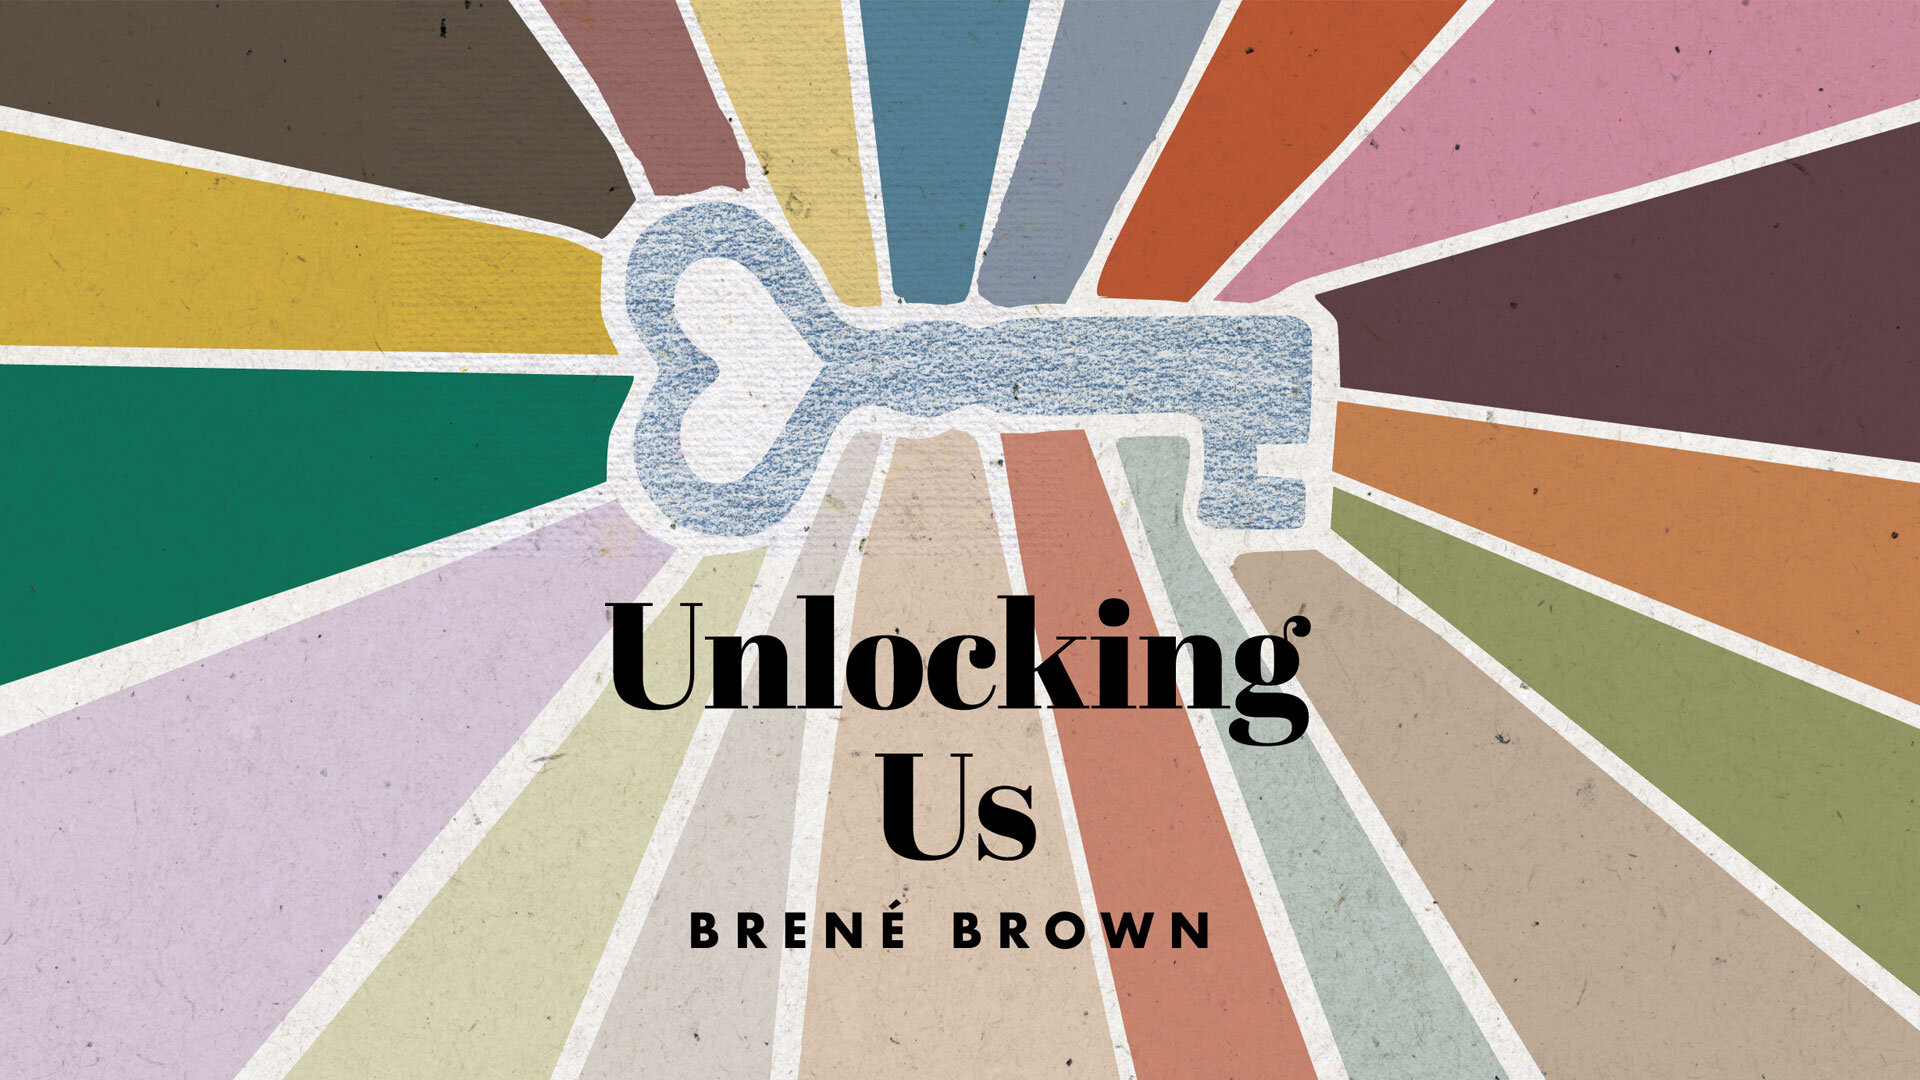 Brené Brown: Unlocking Us (Copy)